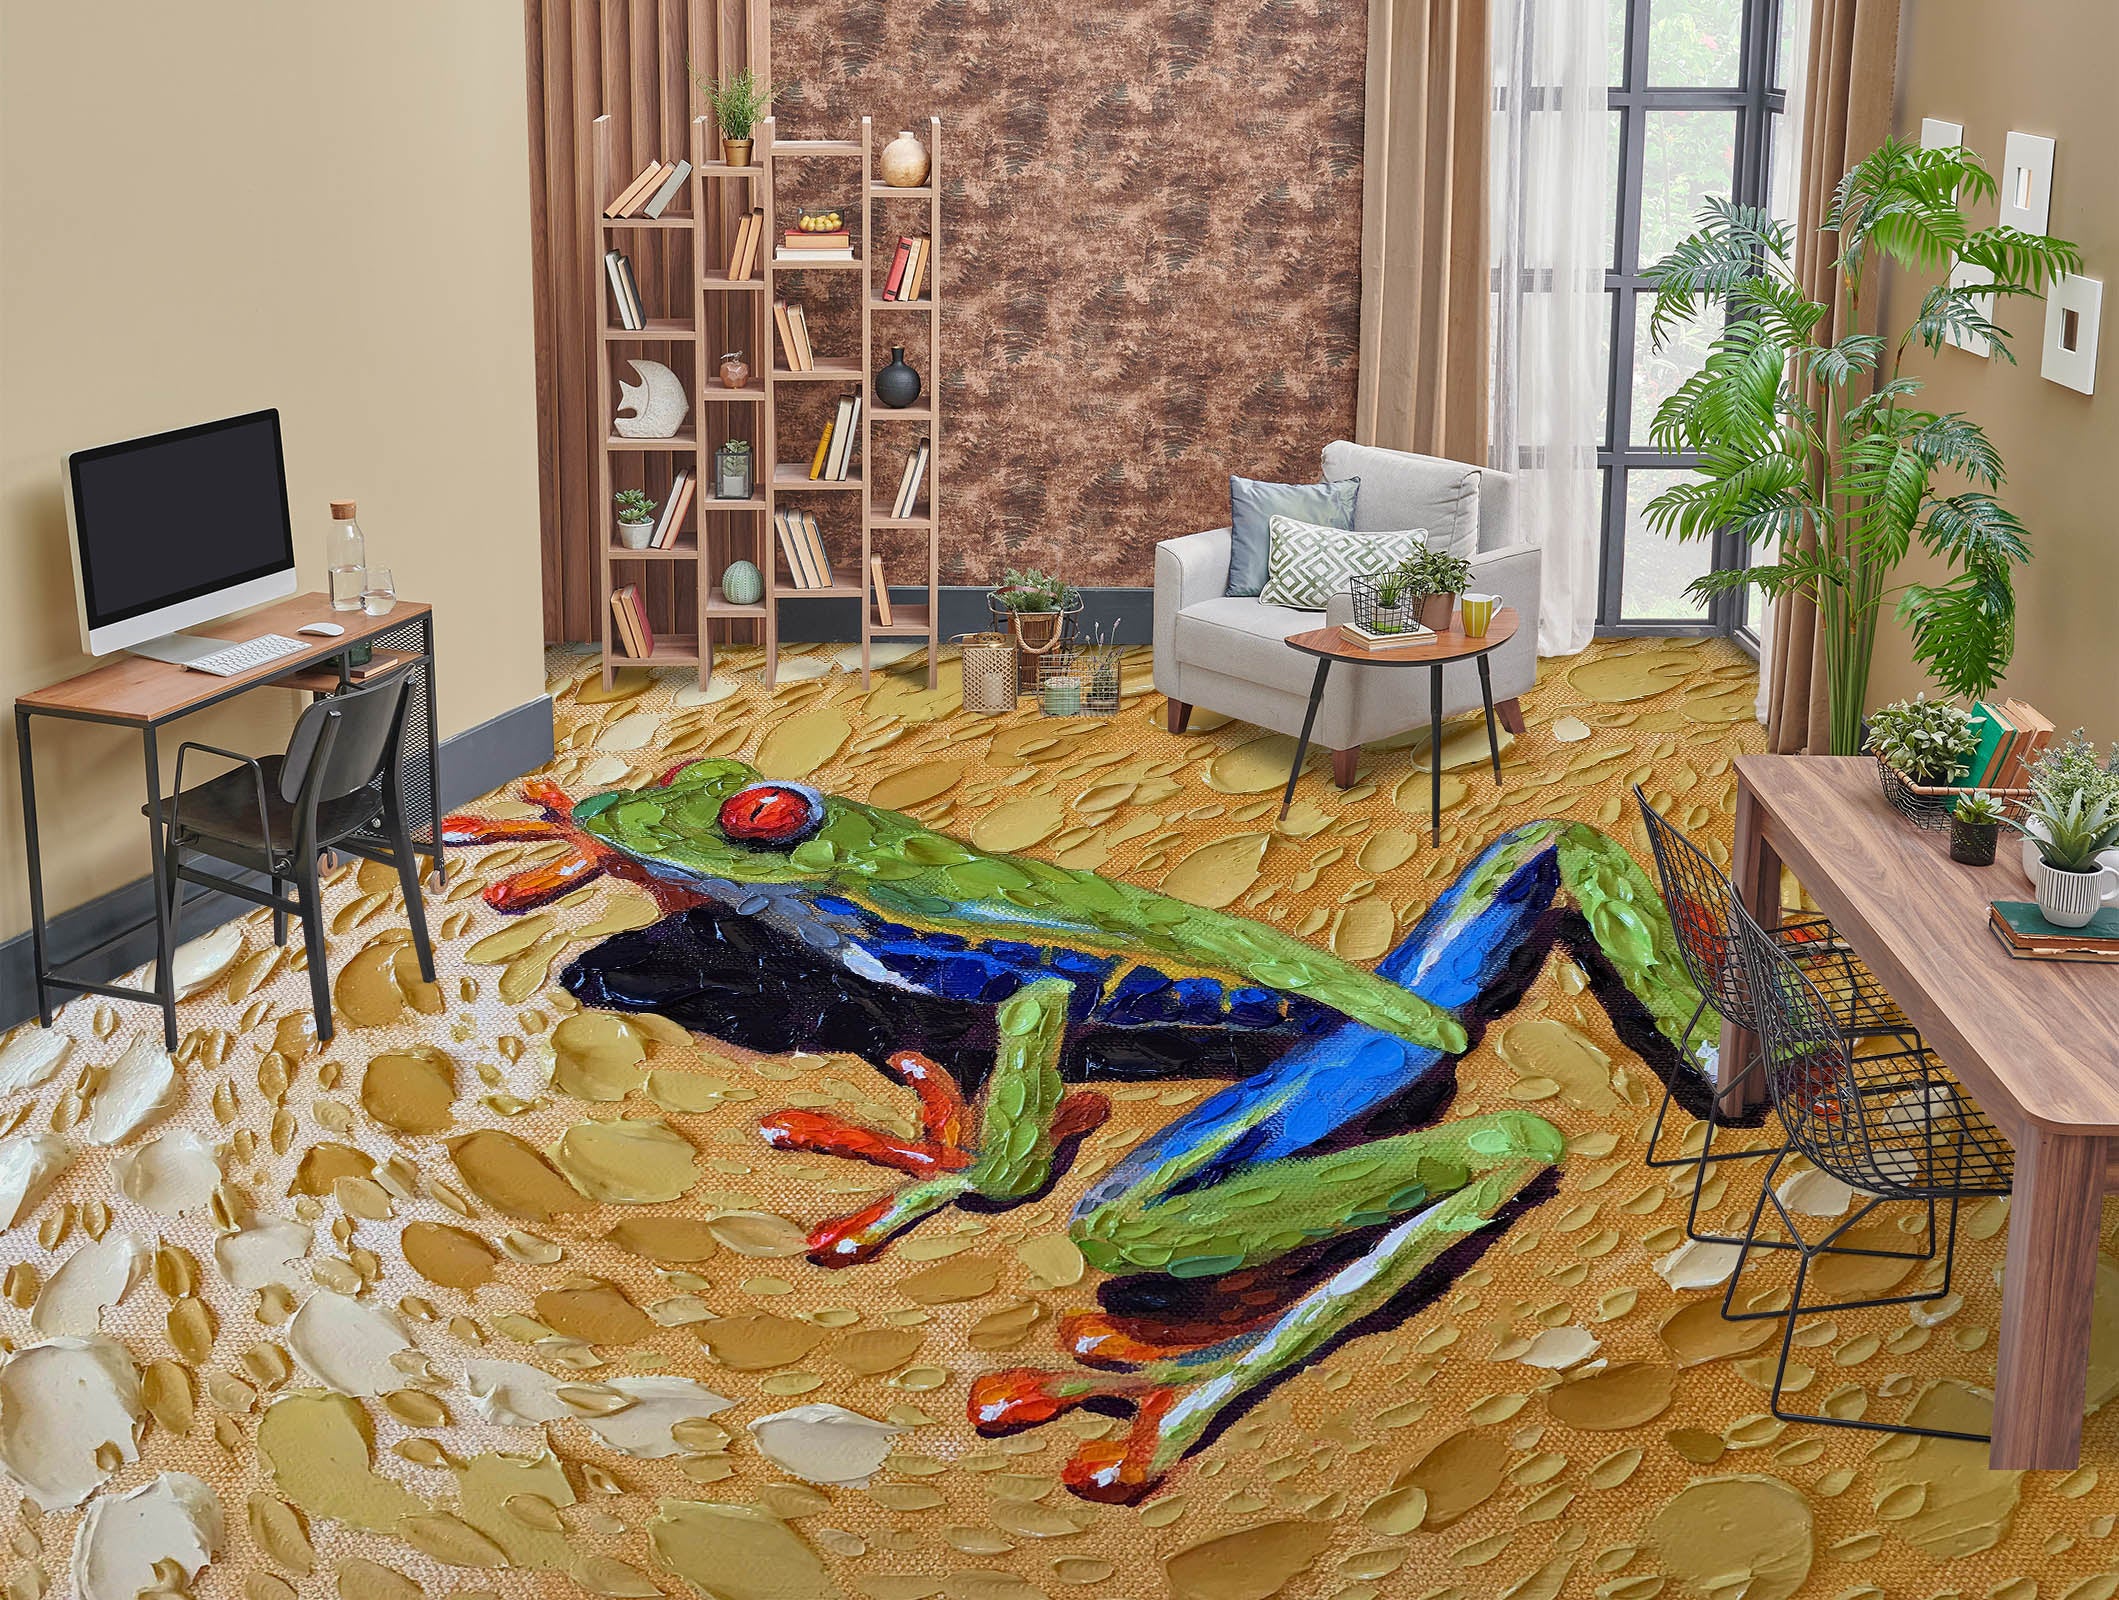 3D Frog 102178 Dena Tollefson Floor Mural  Wallpaper Murals Self-Adhesive Removable Print Epoxy